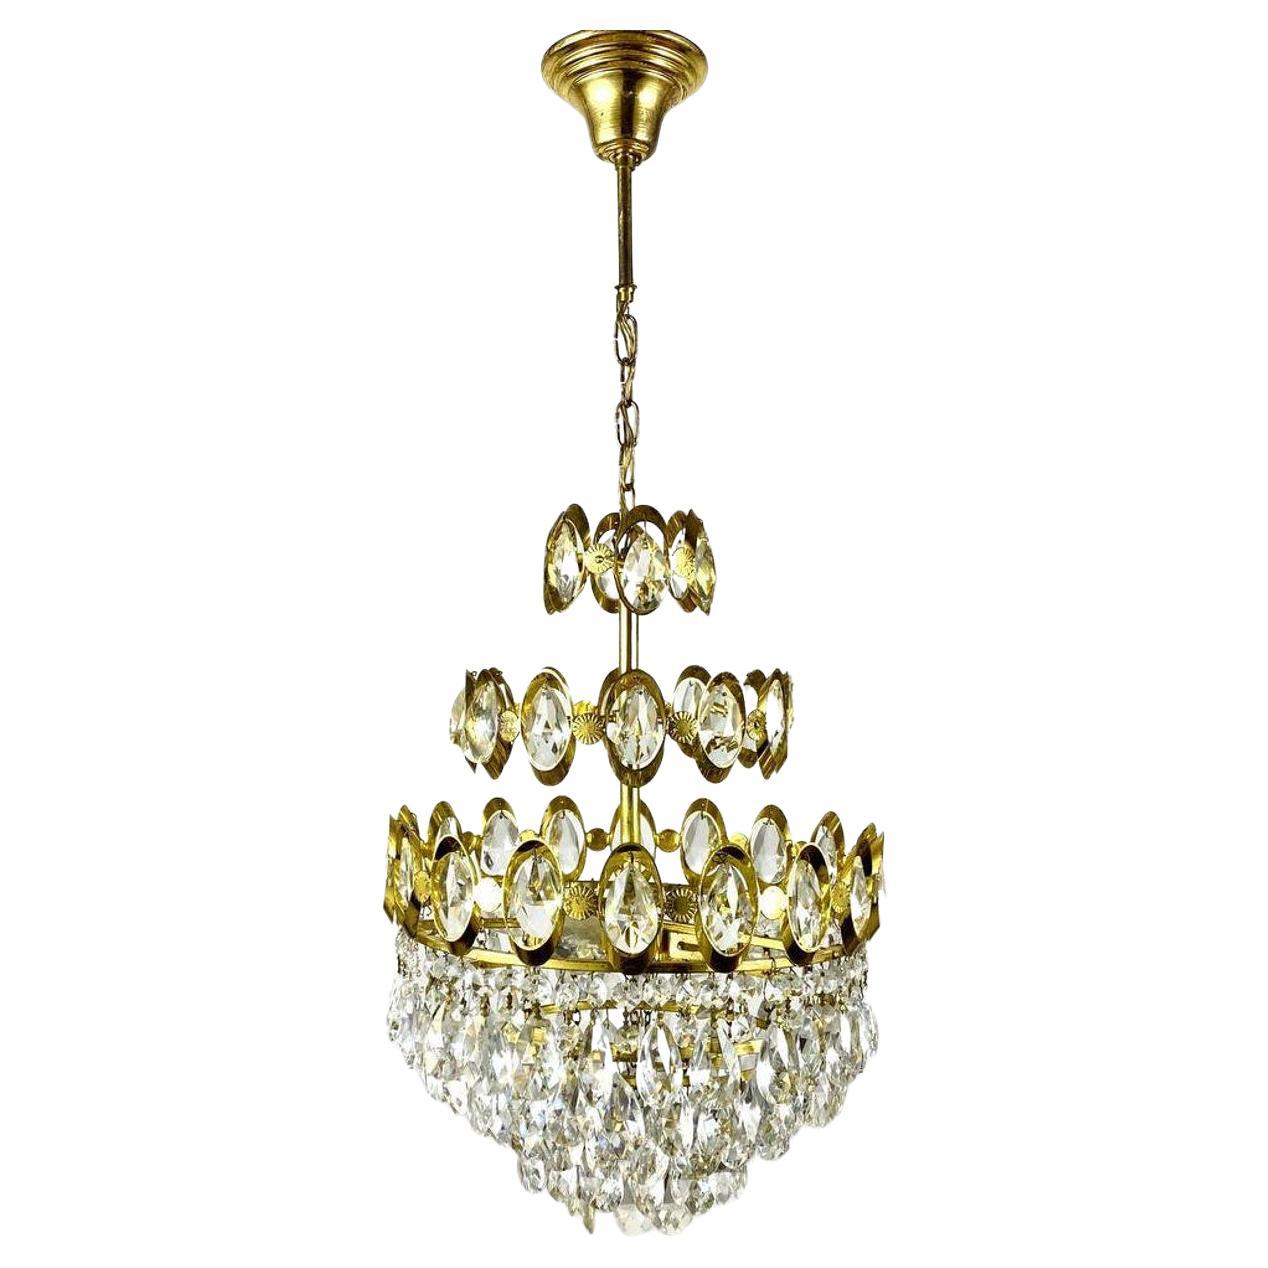 Hollywood Regency Style Cascading Chandelier, Vintage Crystal Lighting